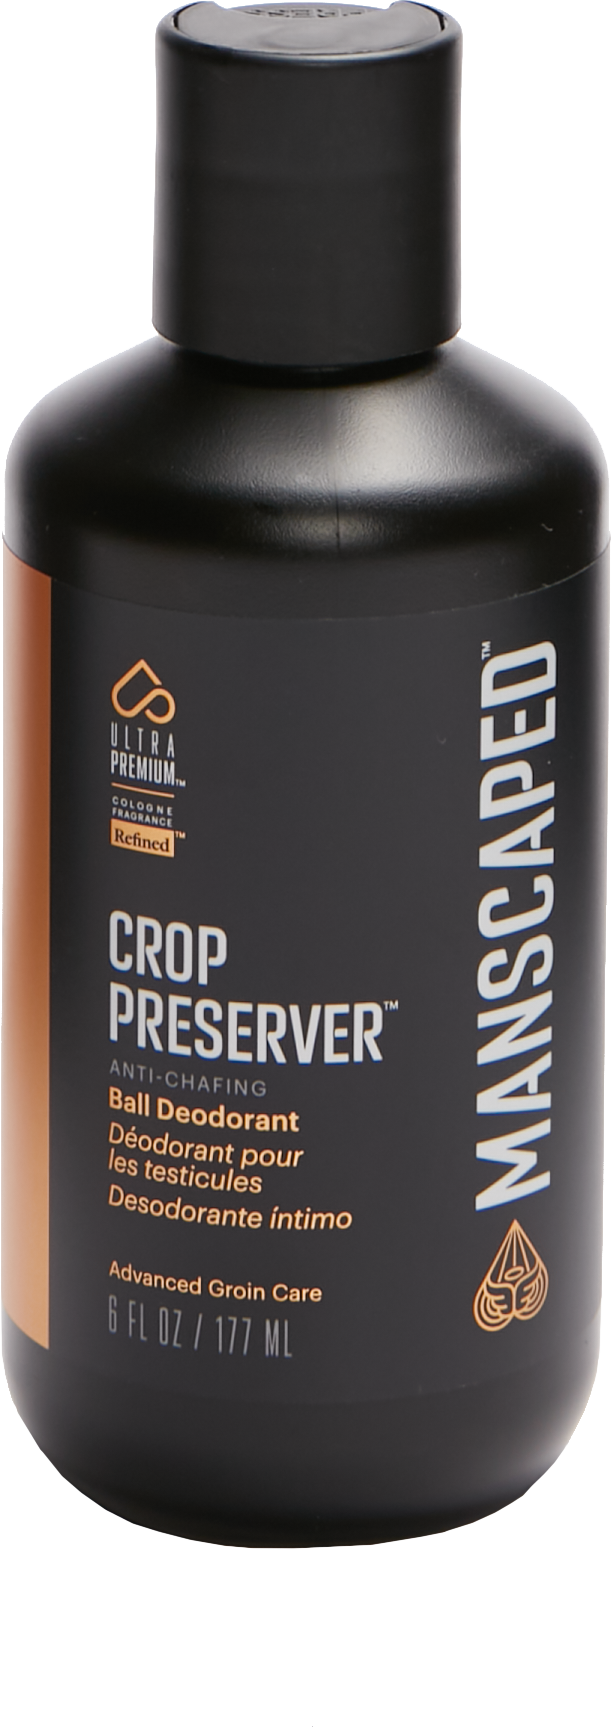 The Crop Preserver™